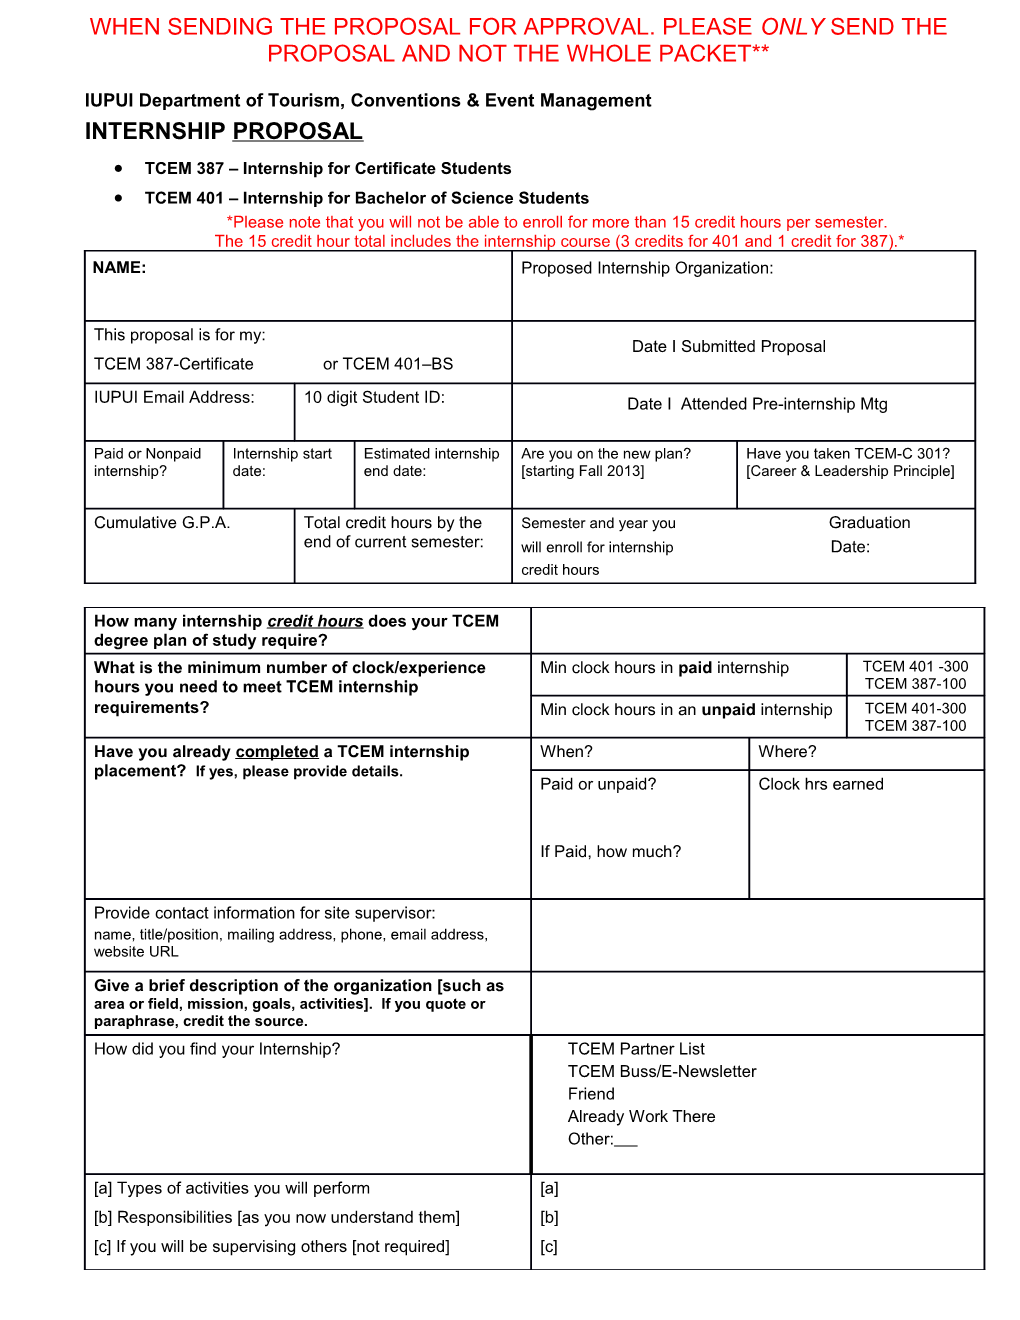 IUPUI - TCEM 387 Internship Proposal 8-17-08